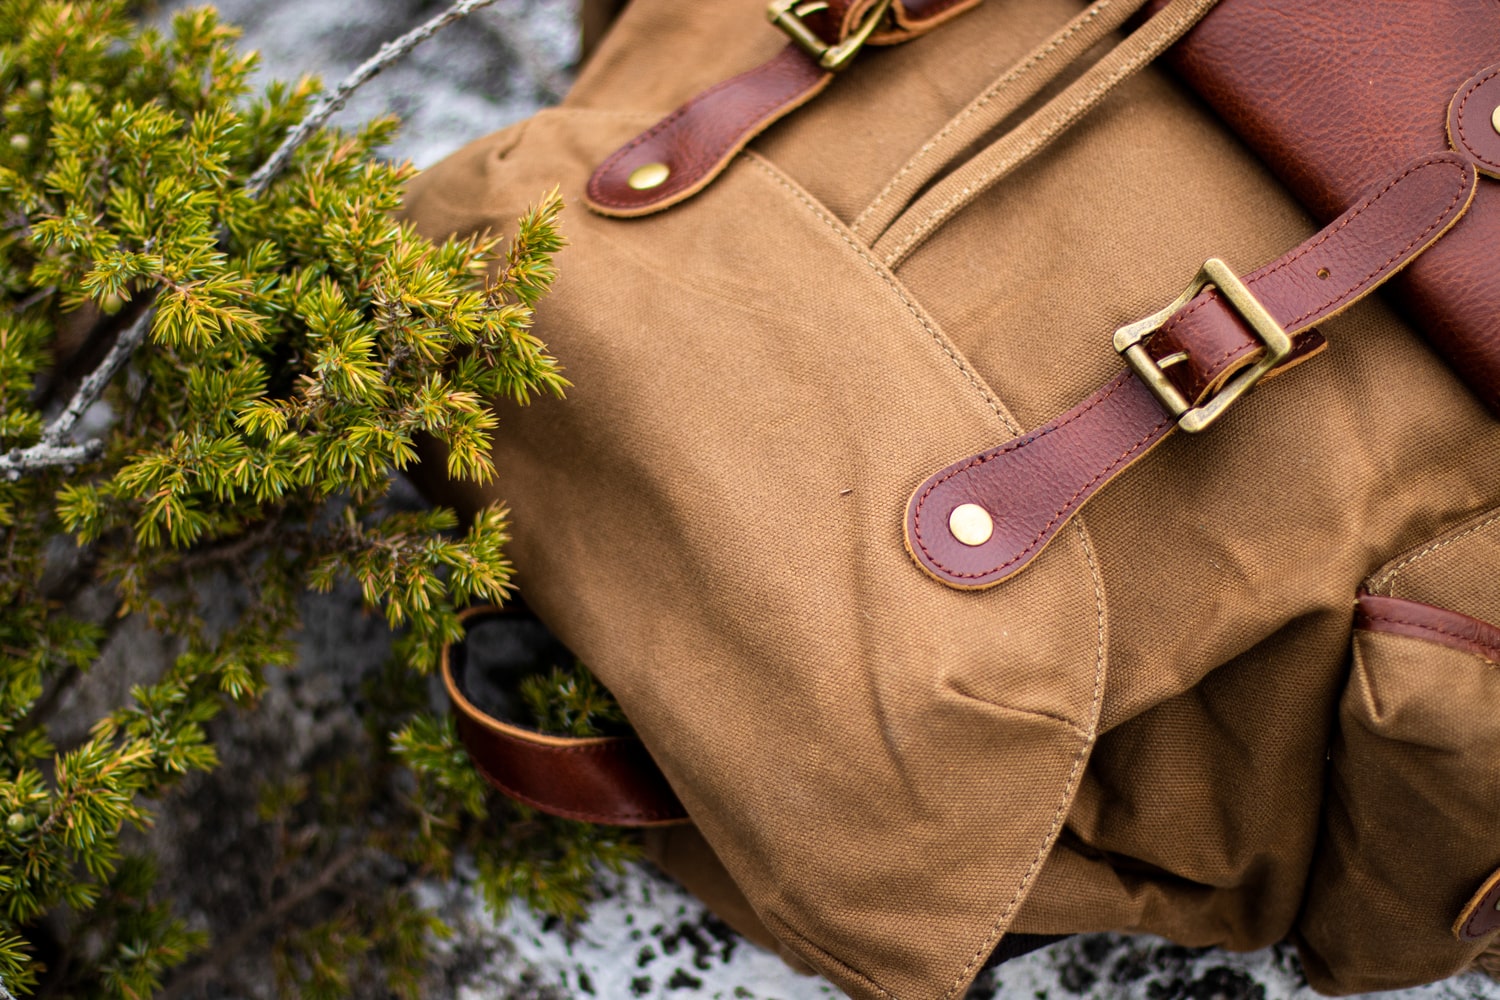 Men's Waxed Canvas Backpack Bag Mixed Leather Rucksack - Khaki